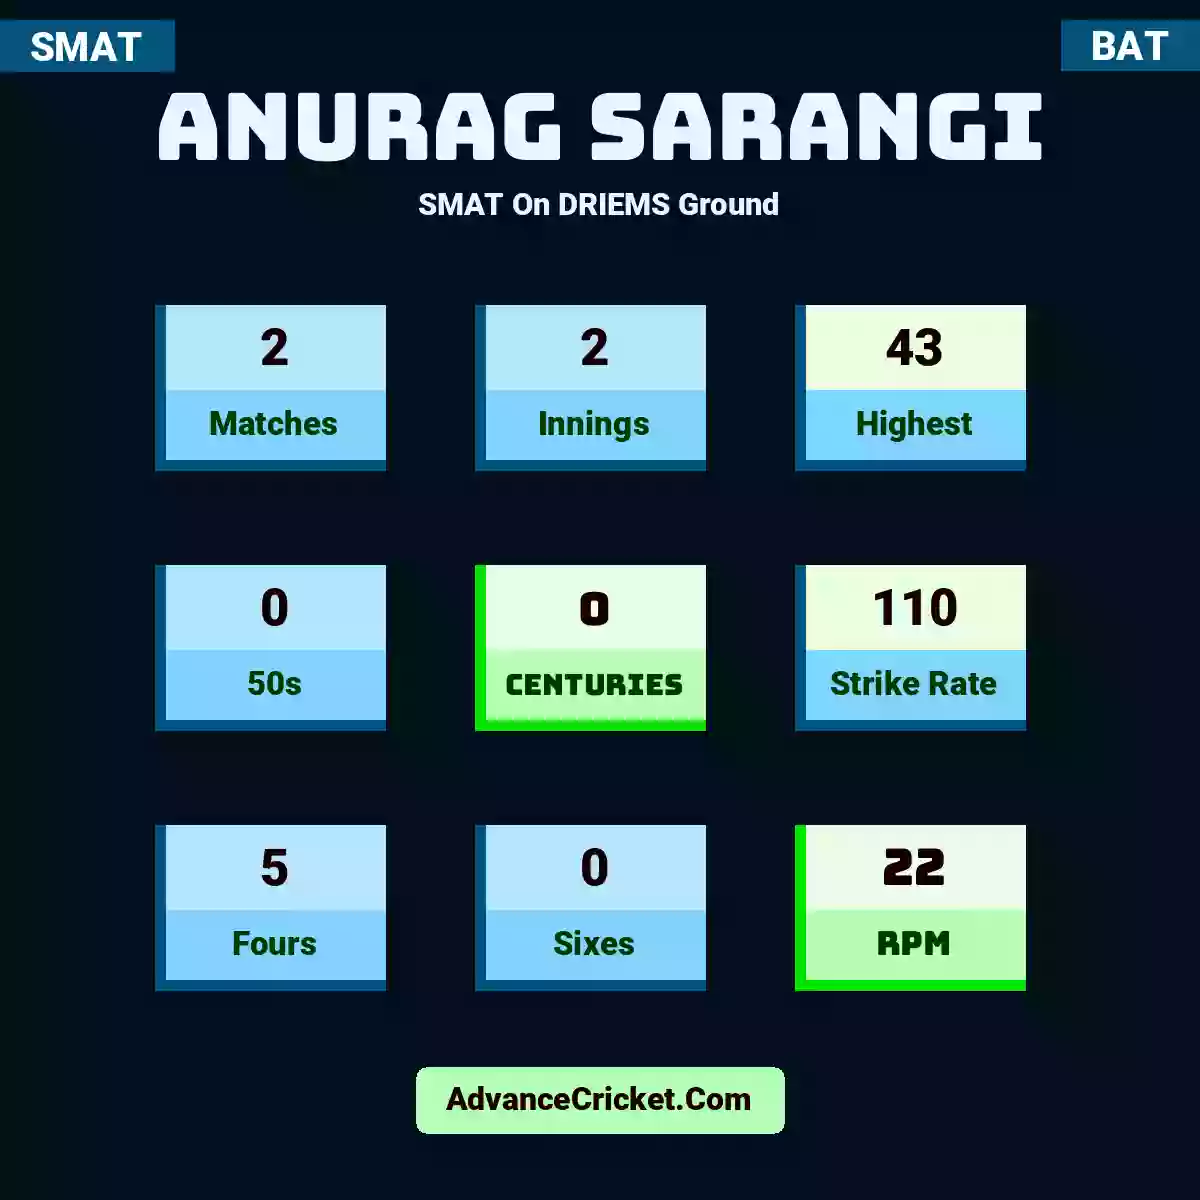 Anurag Sarangi SMAT  On DRIEMS Ground, Anurag Sarangi played 2 matches, scored 43 runs as highest, 0 half-centuries, and 0 centuries, with a strike rate of 110. A.Sarangi hit 5 fours and 0 sixes, with an RPM of 22.